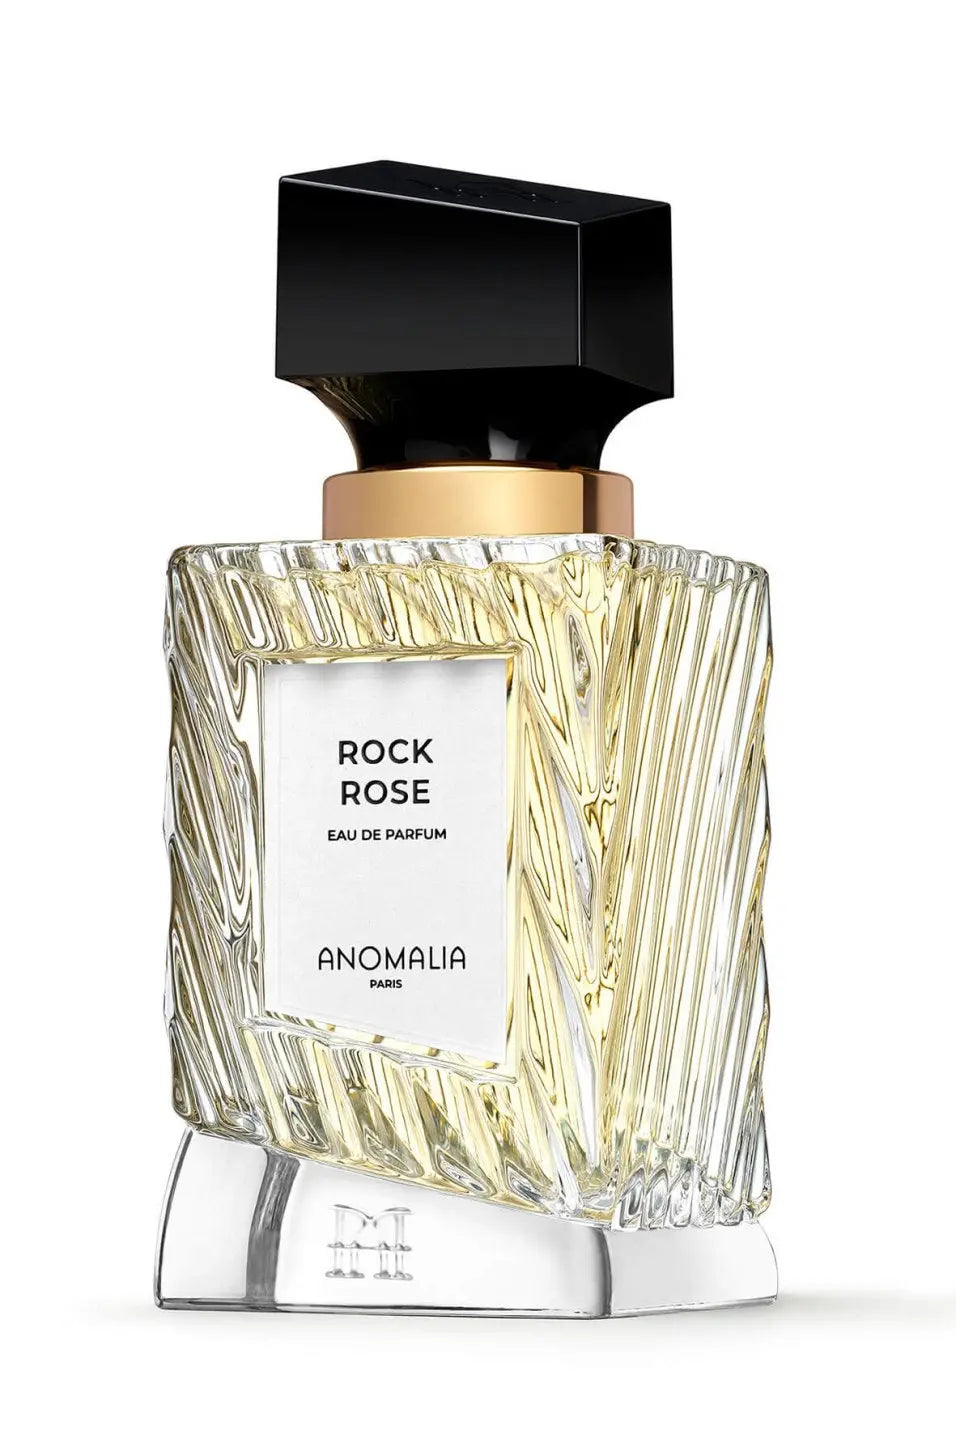 Anomalia Rock Rose eau de parfum - 70 ml